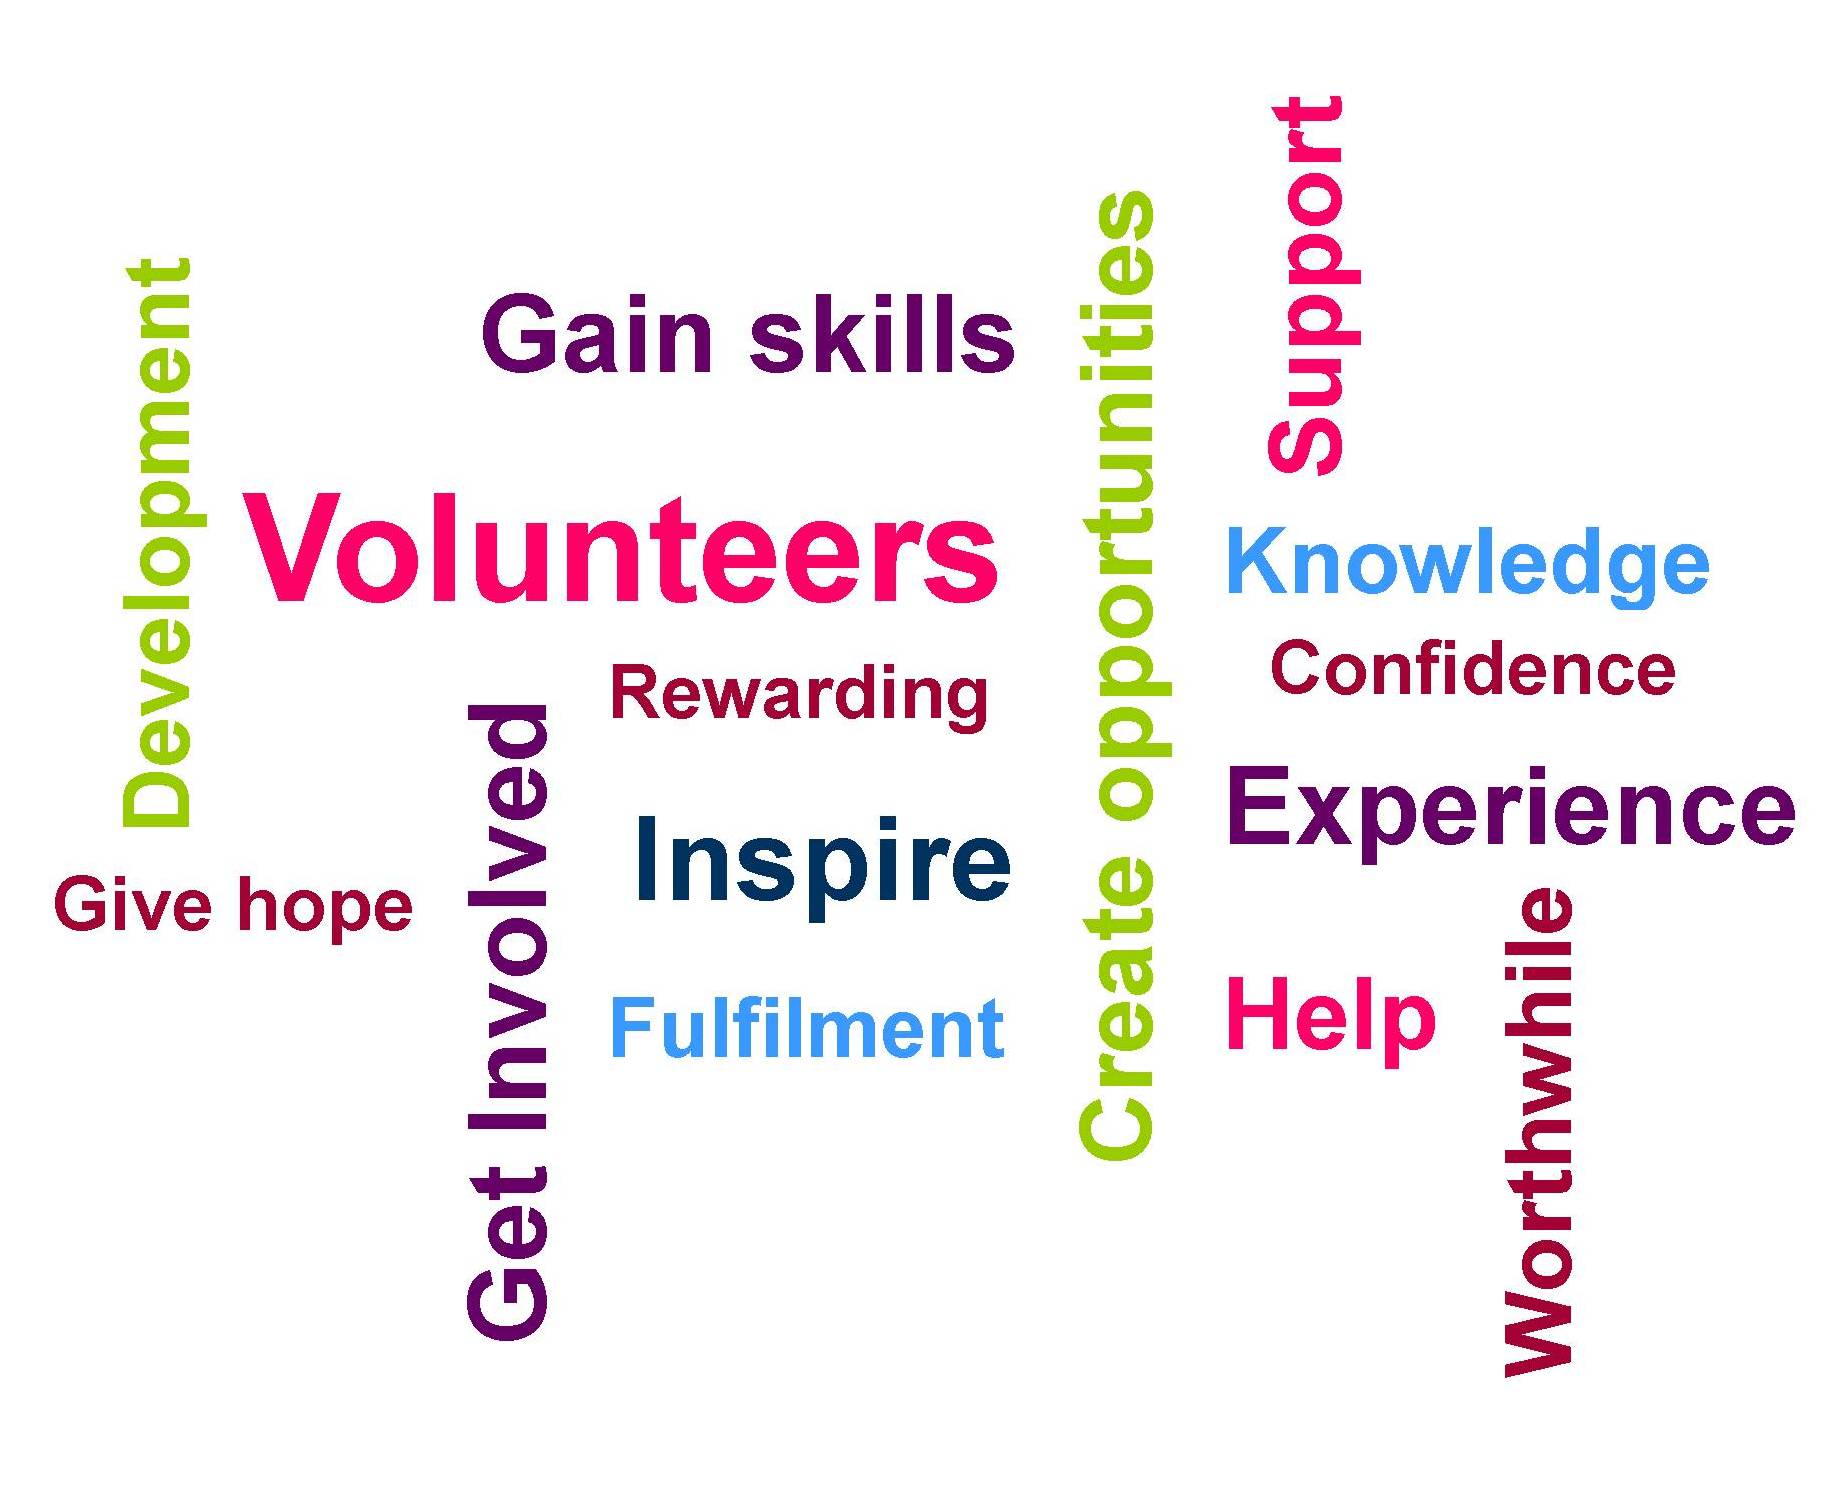 Experience name. Volunteering тема. Volunteering топик по английскому. Kinds of Volunteer. Kinds of Volunteer work.